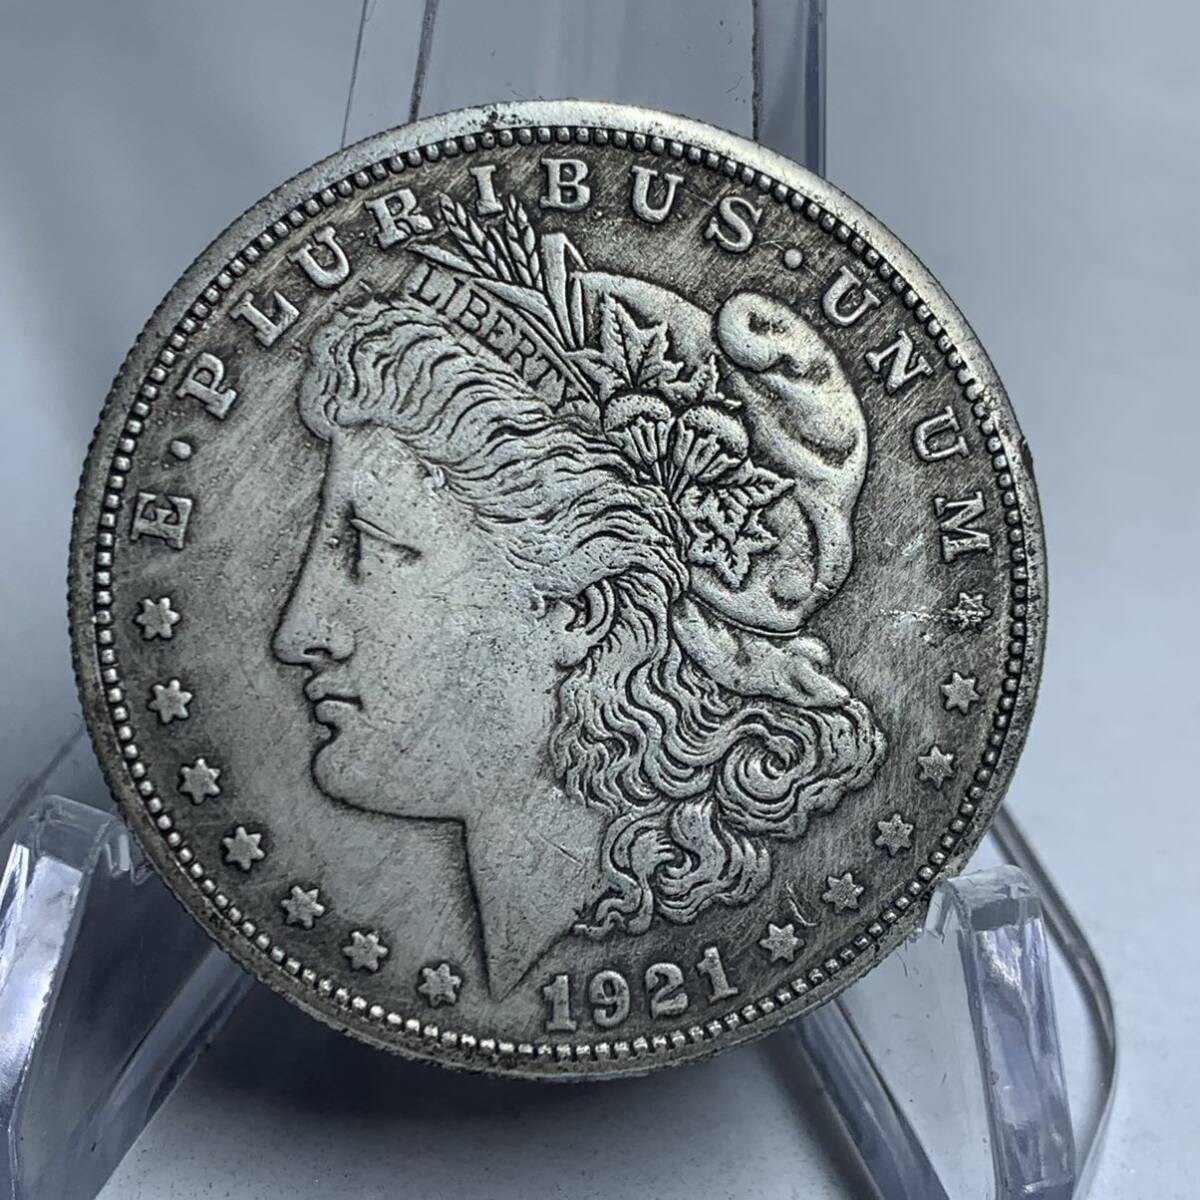 WX1468アメリカ記念メダル モルガン 1921年 鷹紋 入手困難 在庫限り 外国硬貨 貿易銀 海外古銭 コレクションコイン貨幣 重さ約23g_画像1